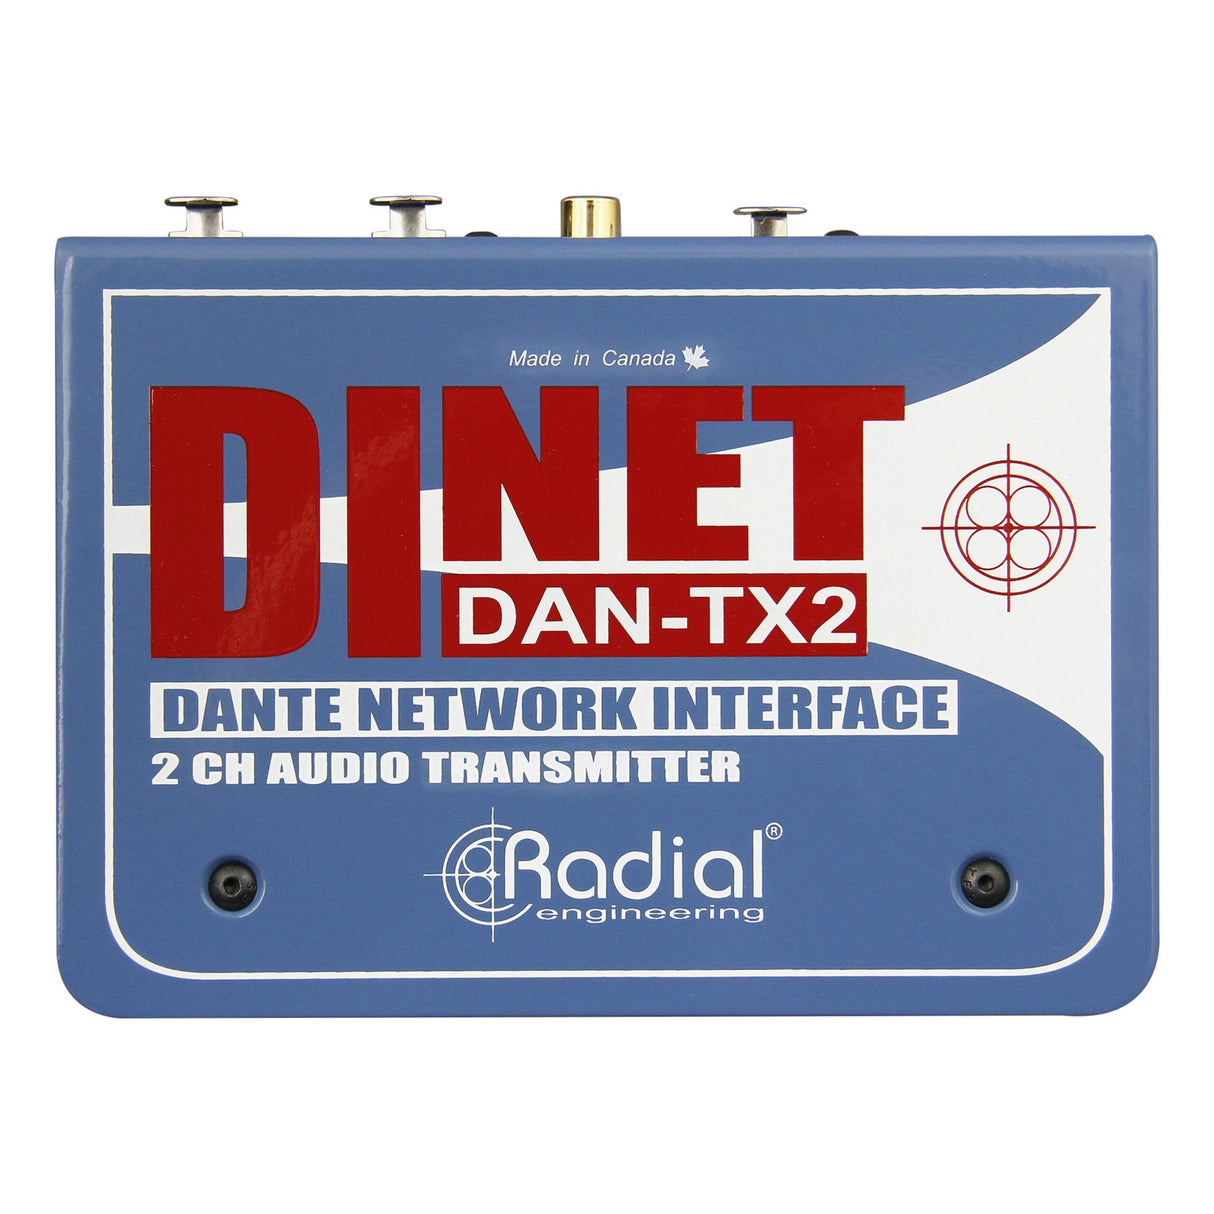 Radial DiNet DAN-TX2 2-Channel Dante Network Transmitter